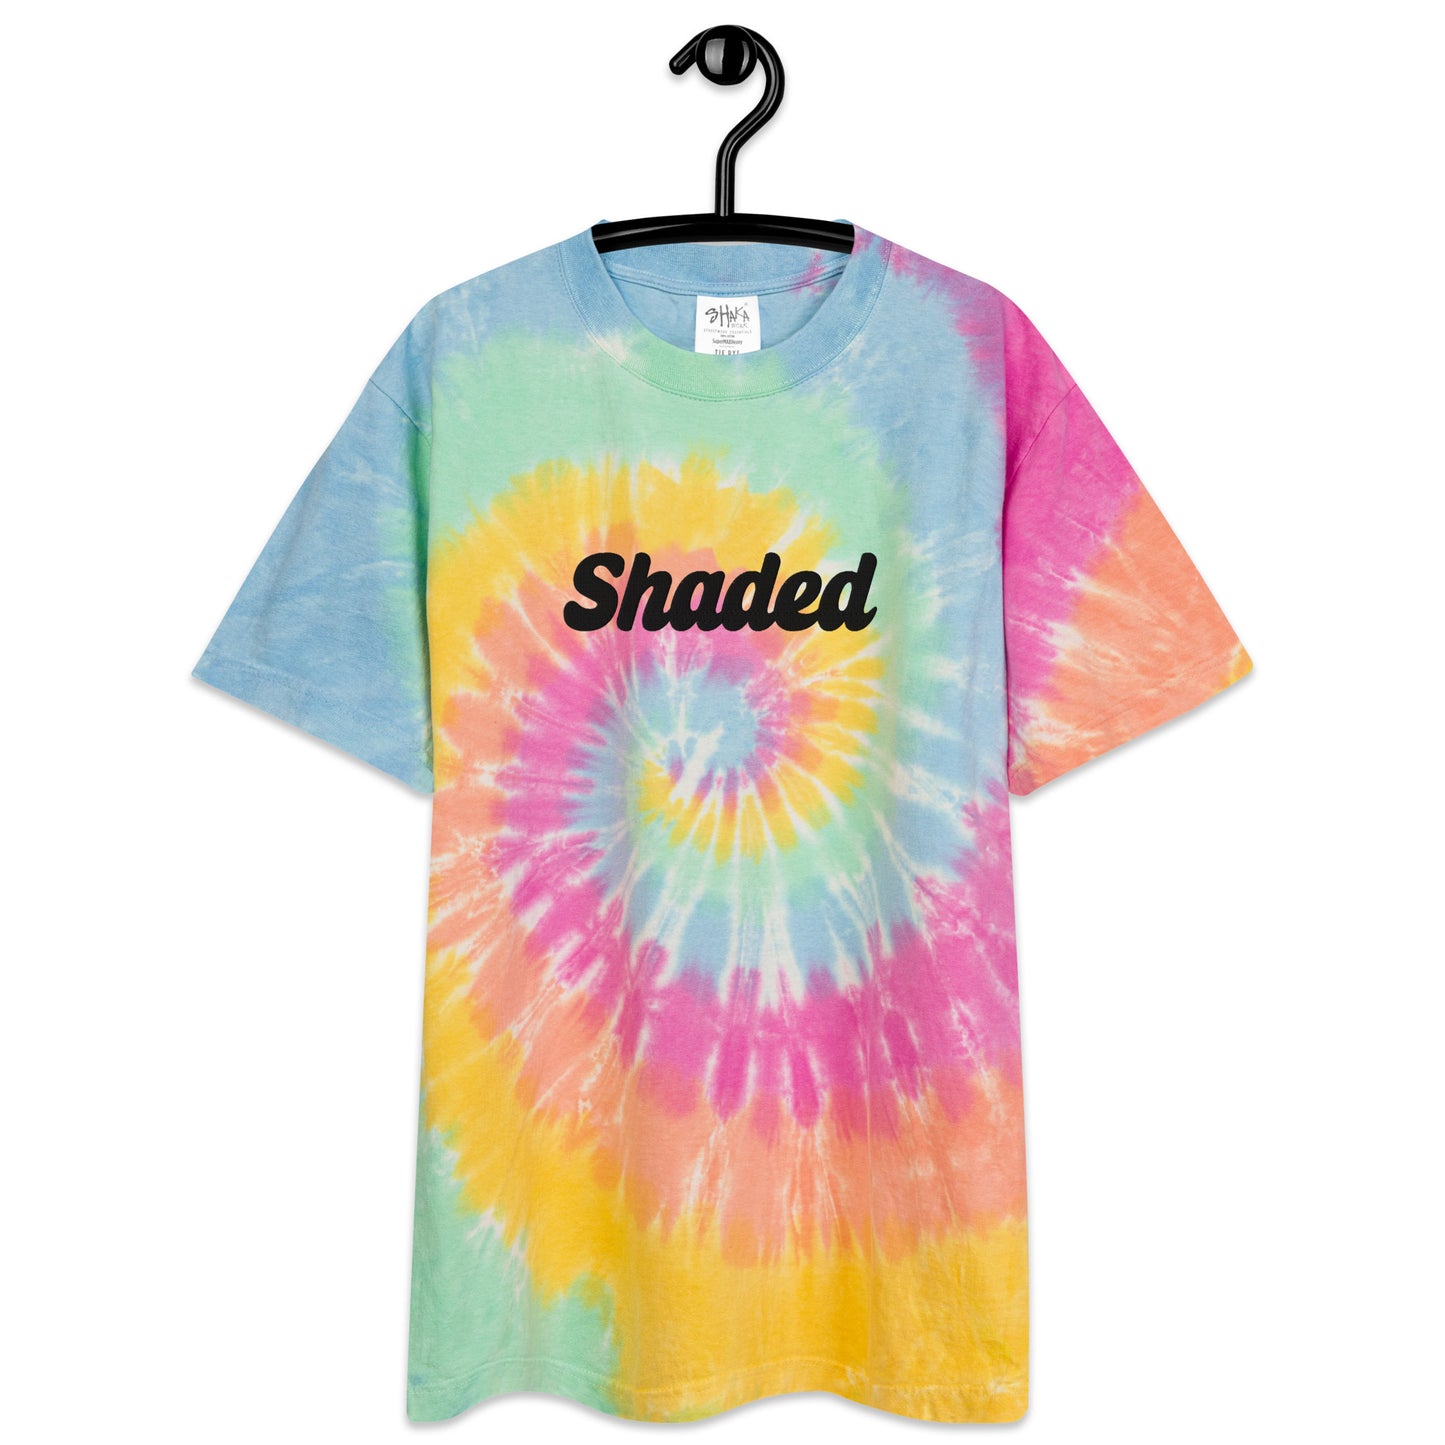 Shaded - TYE DYE T-shirt